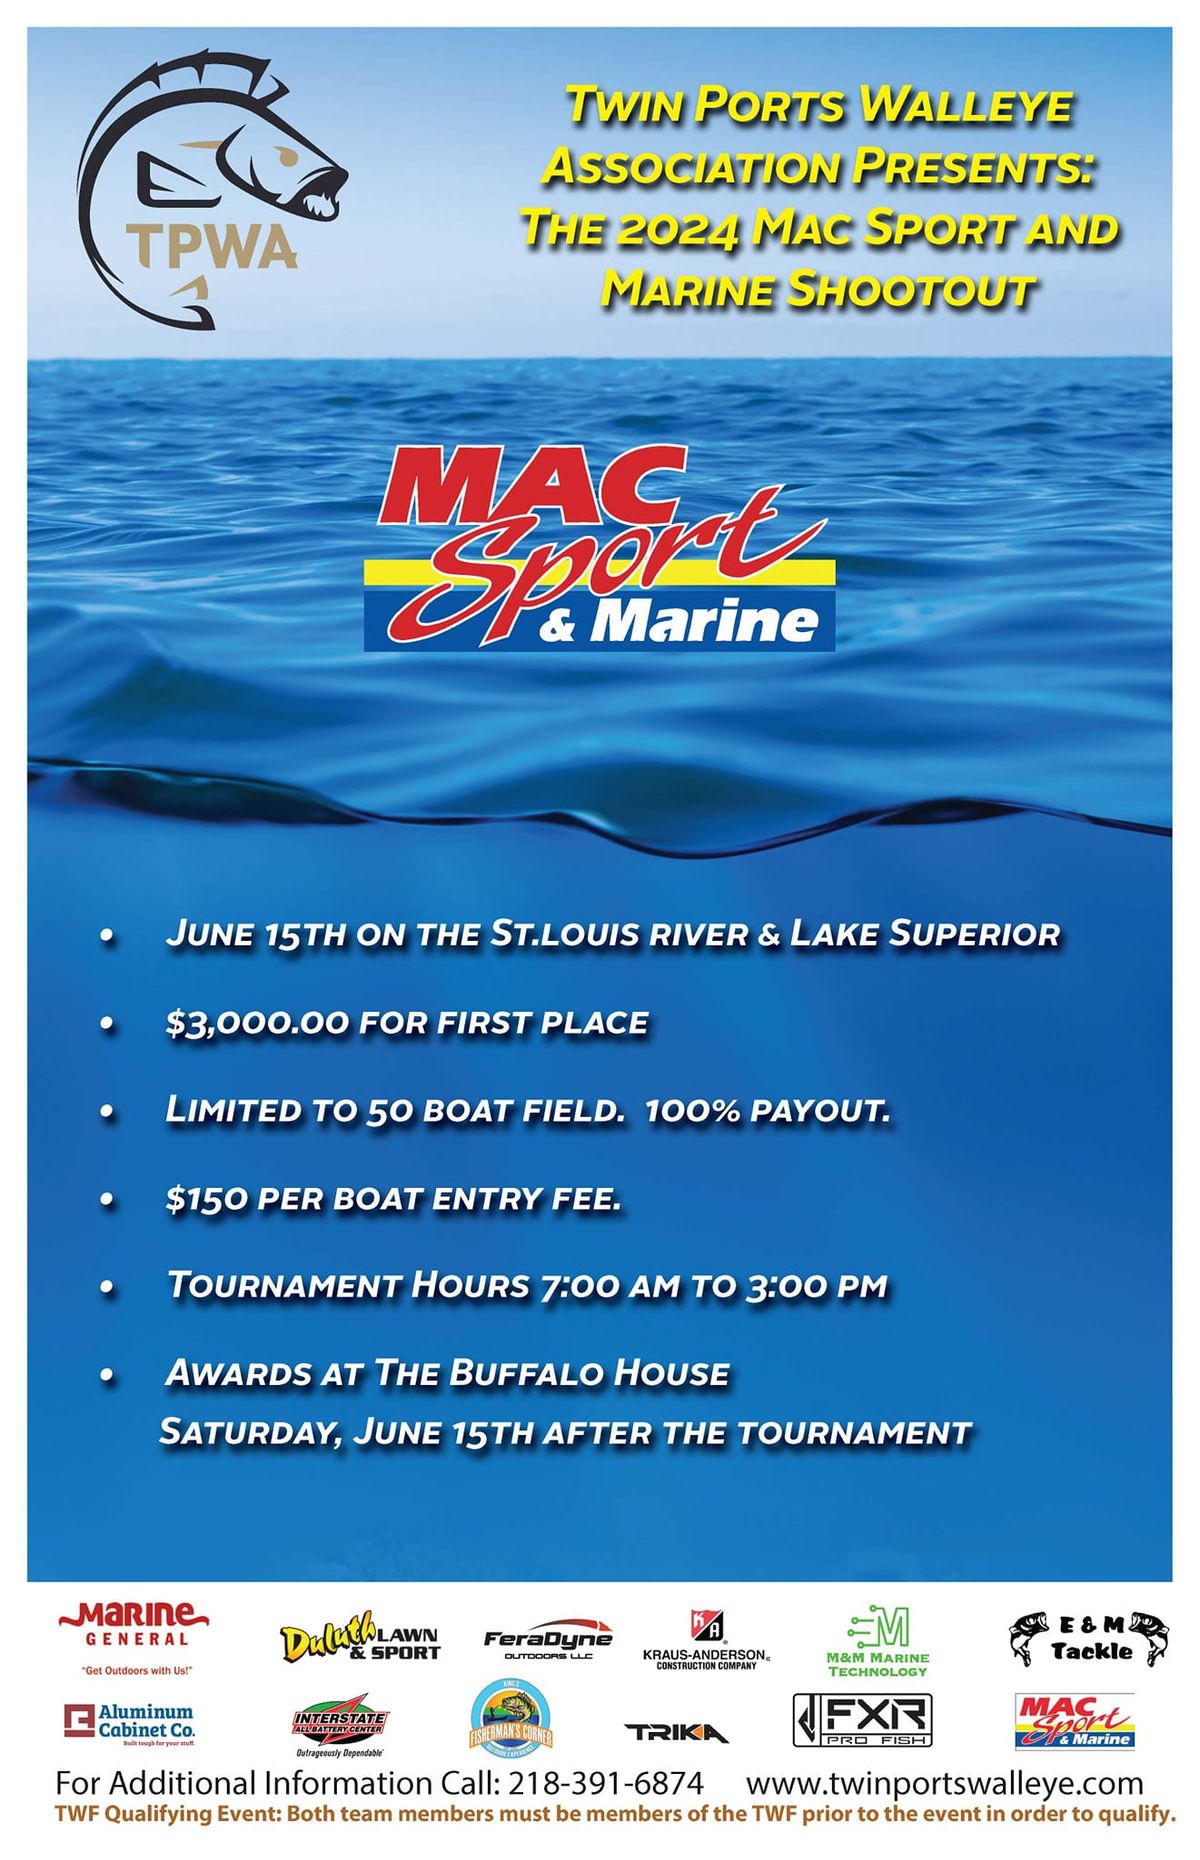 The 2024 Mac Sport & Marine Shootout